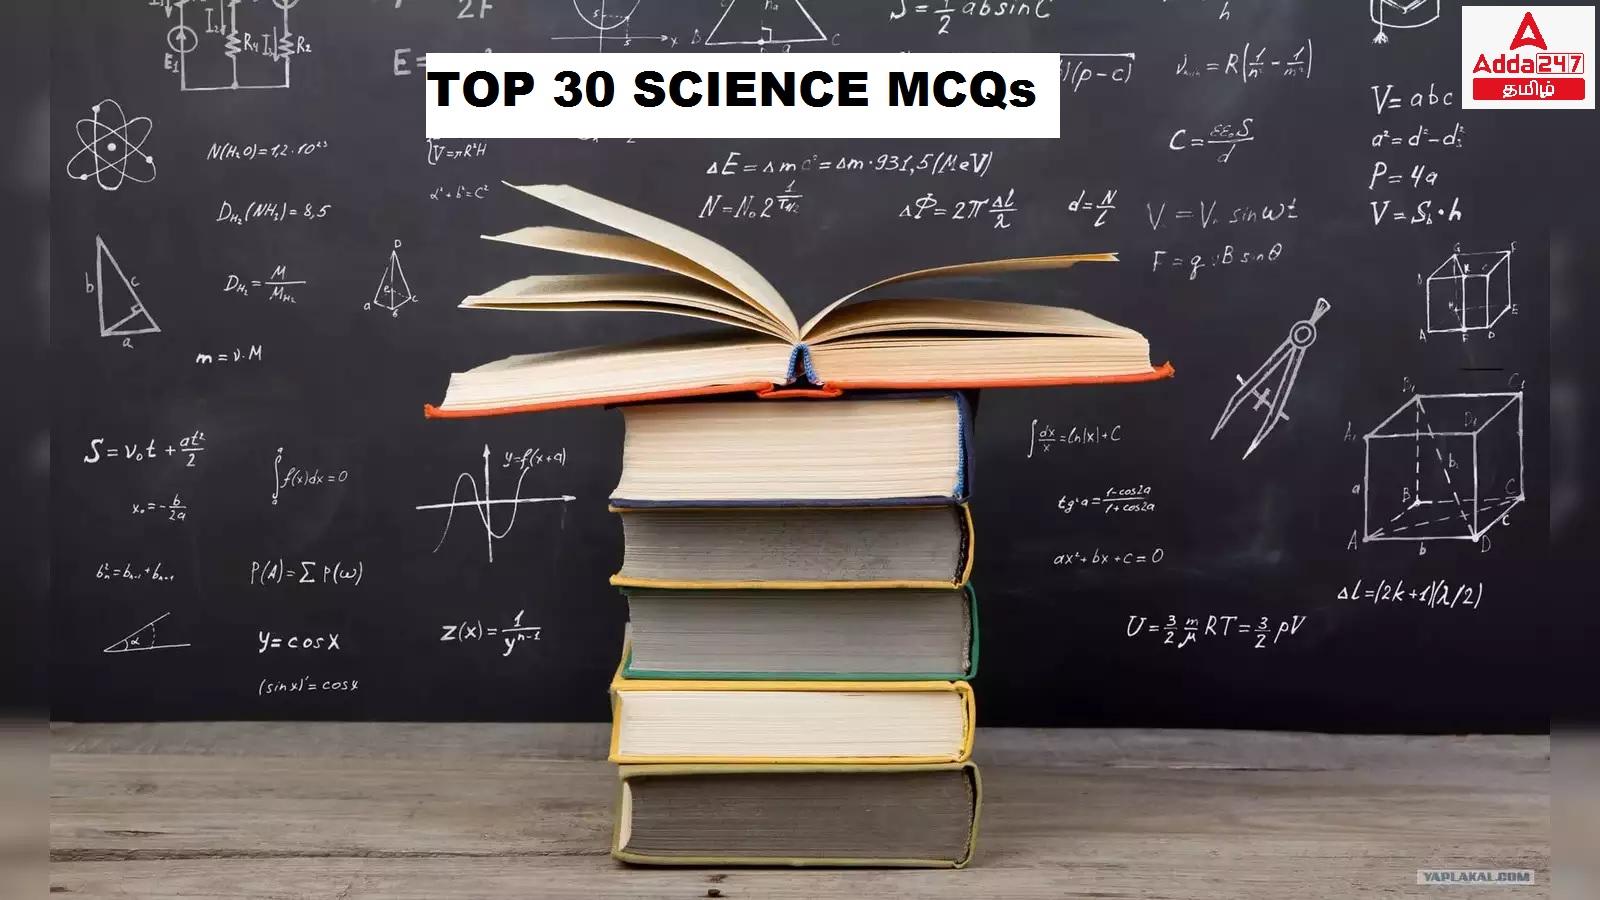 Top 30 Science MCQs